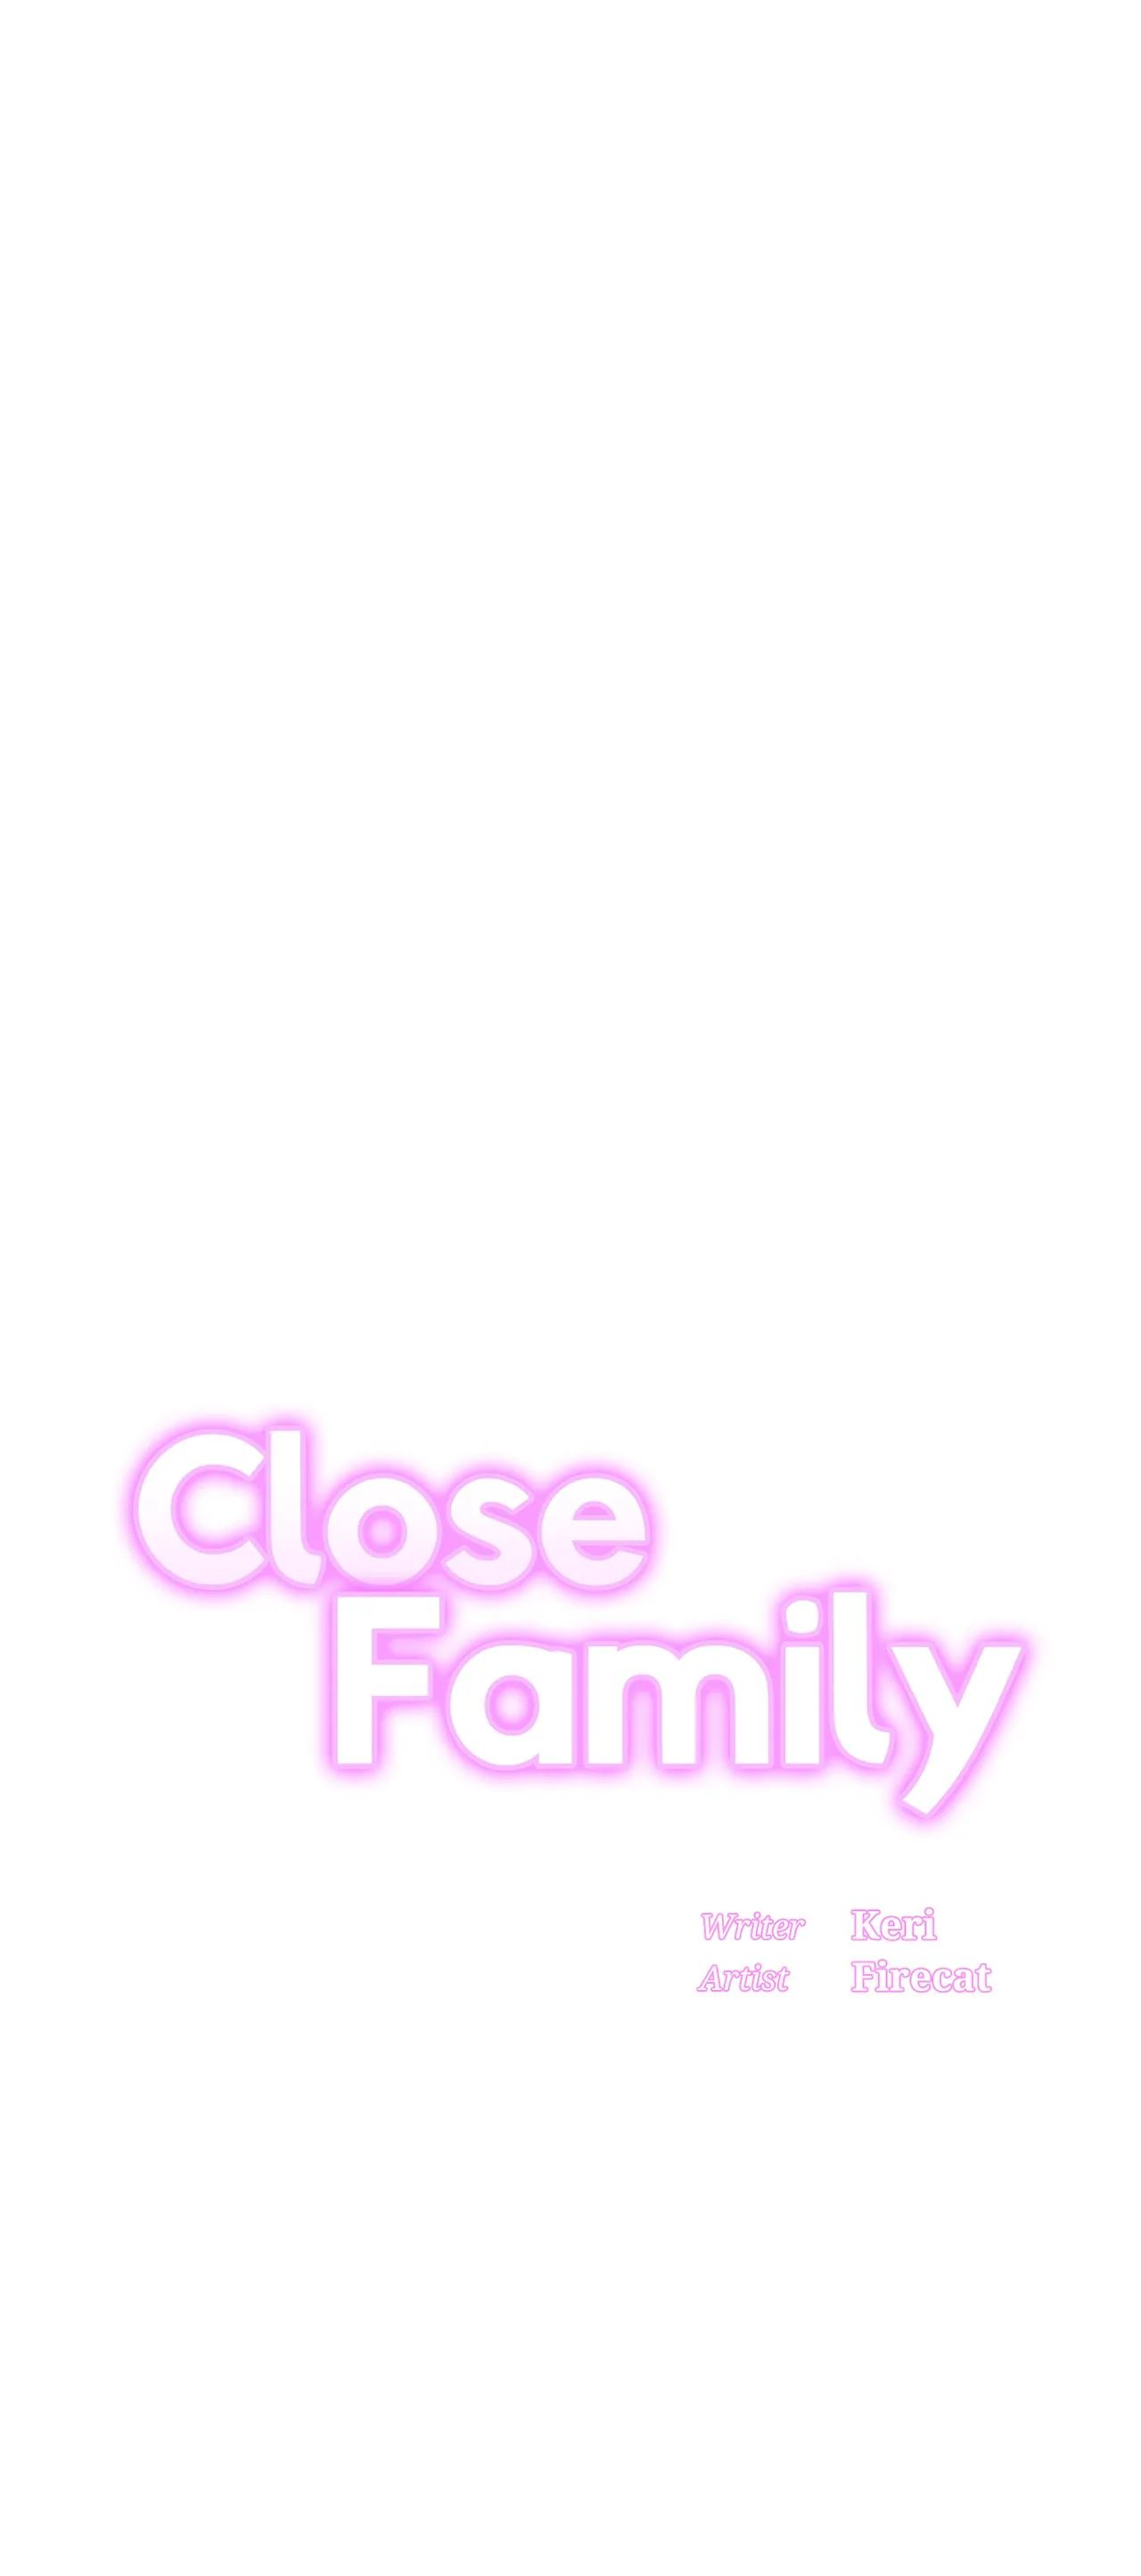 Close Family image